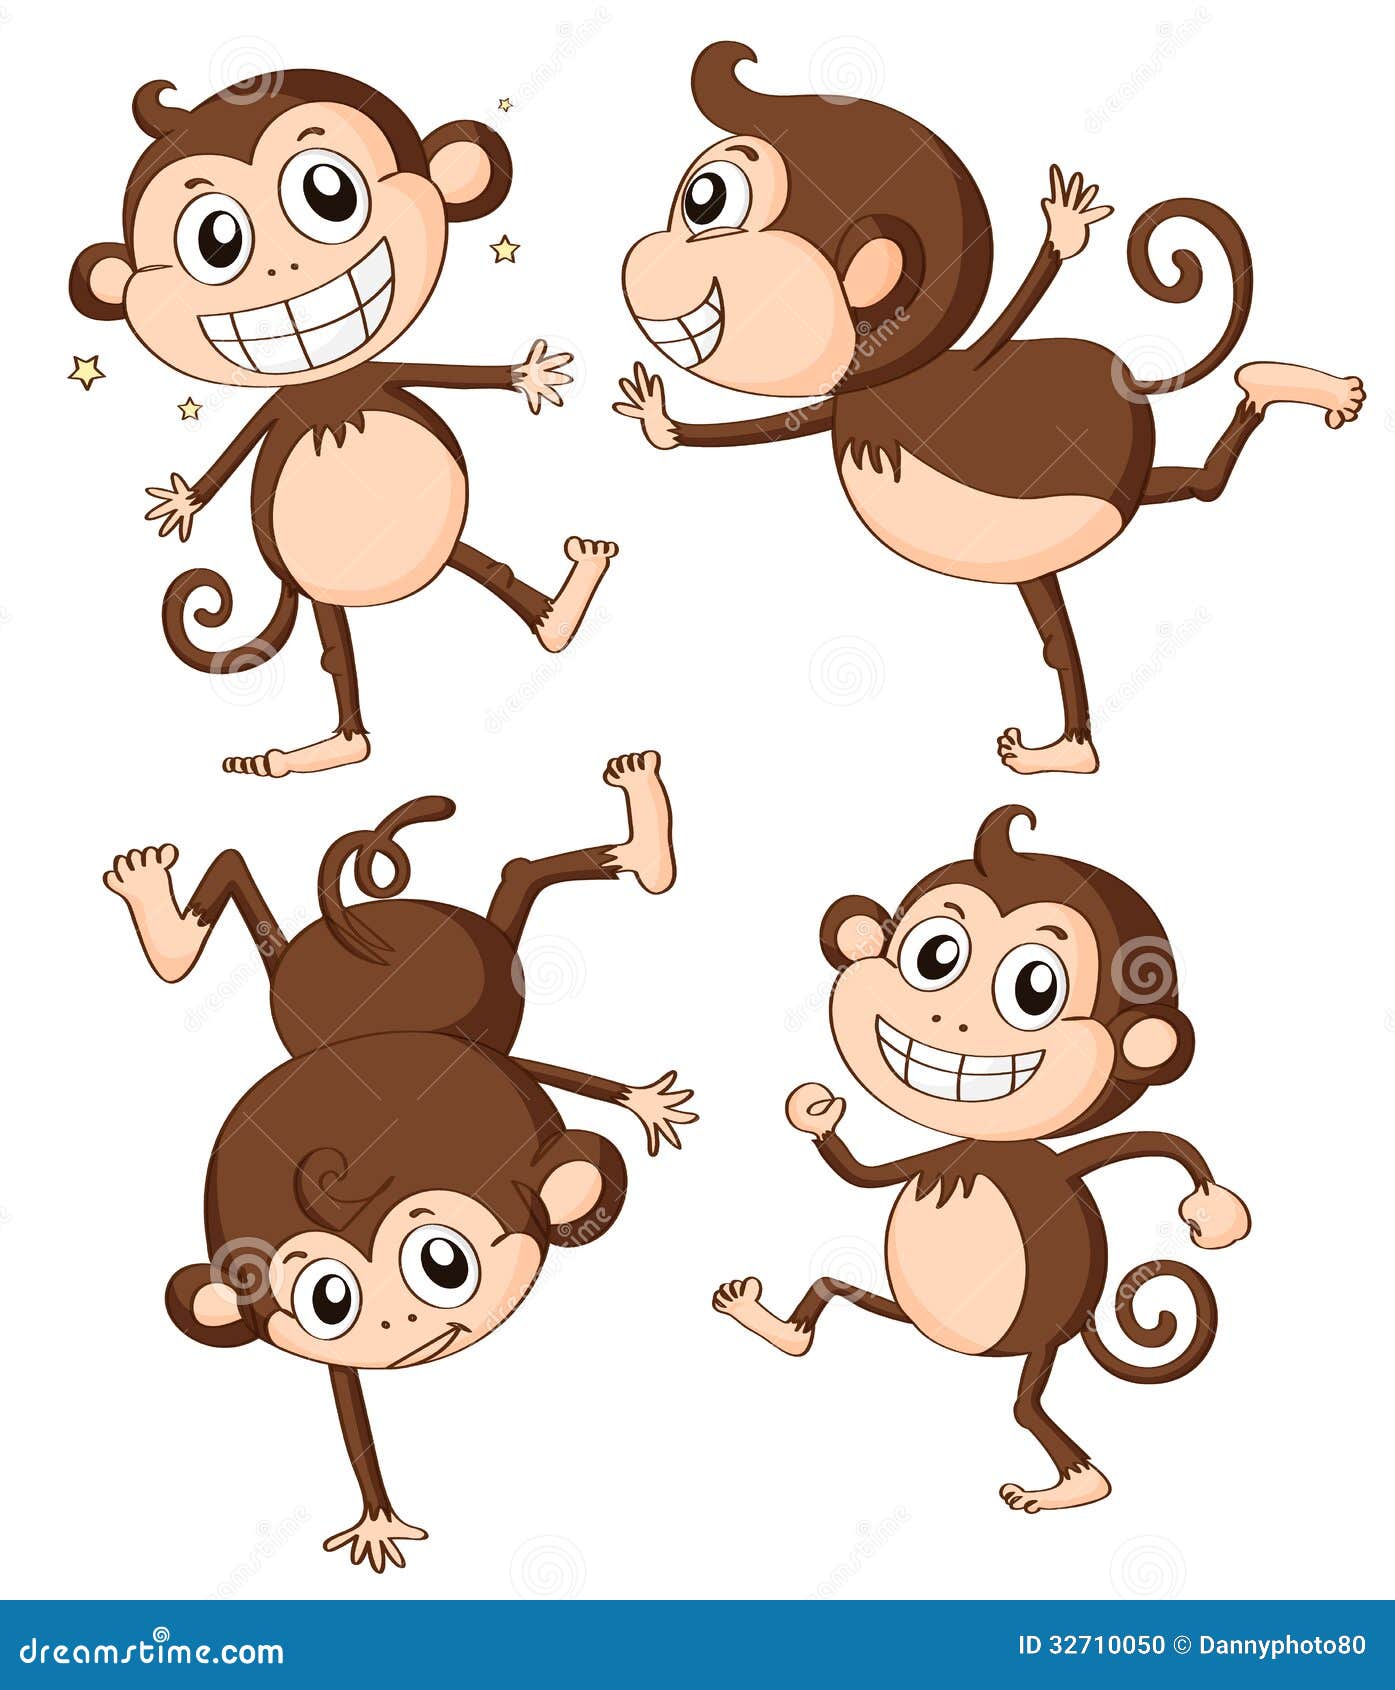 monkey illustrations clipart - photo #32